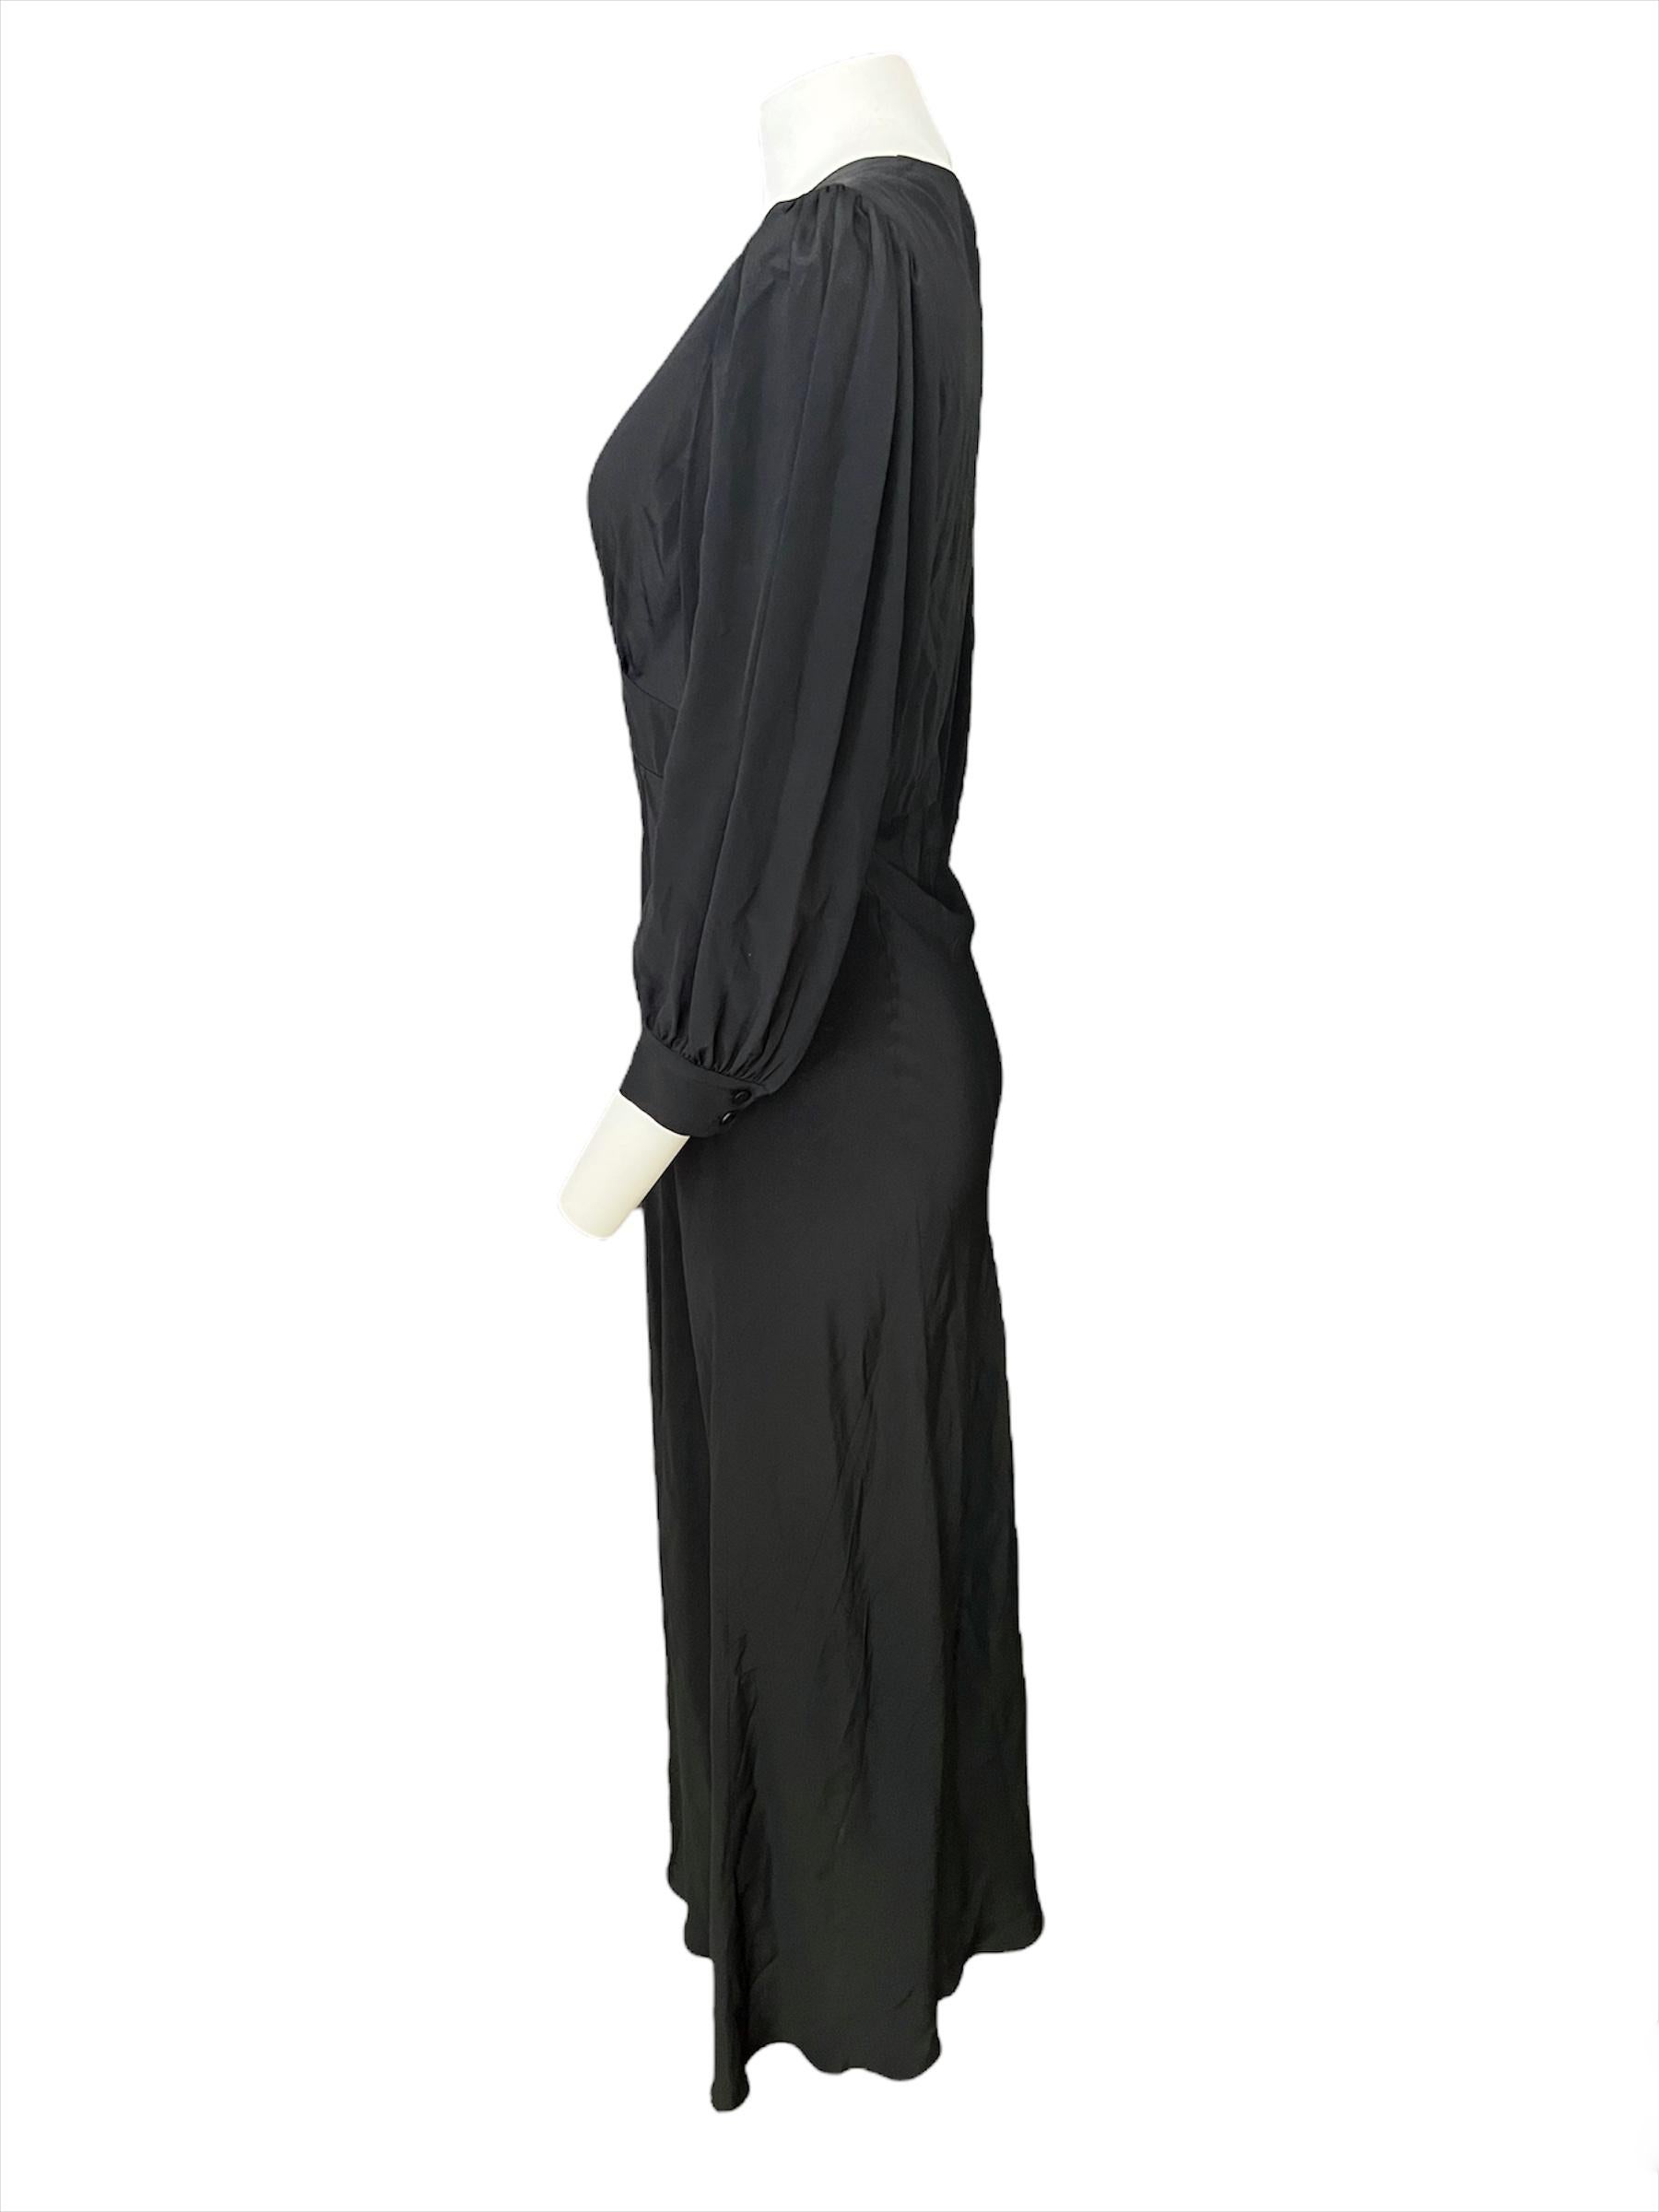 Alberta Ferretti Black Maxi Evening Dress, Size 6 In Excellent Condition For Sale In Beverly Hills, CA